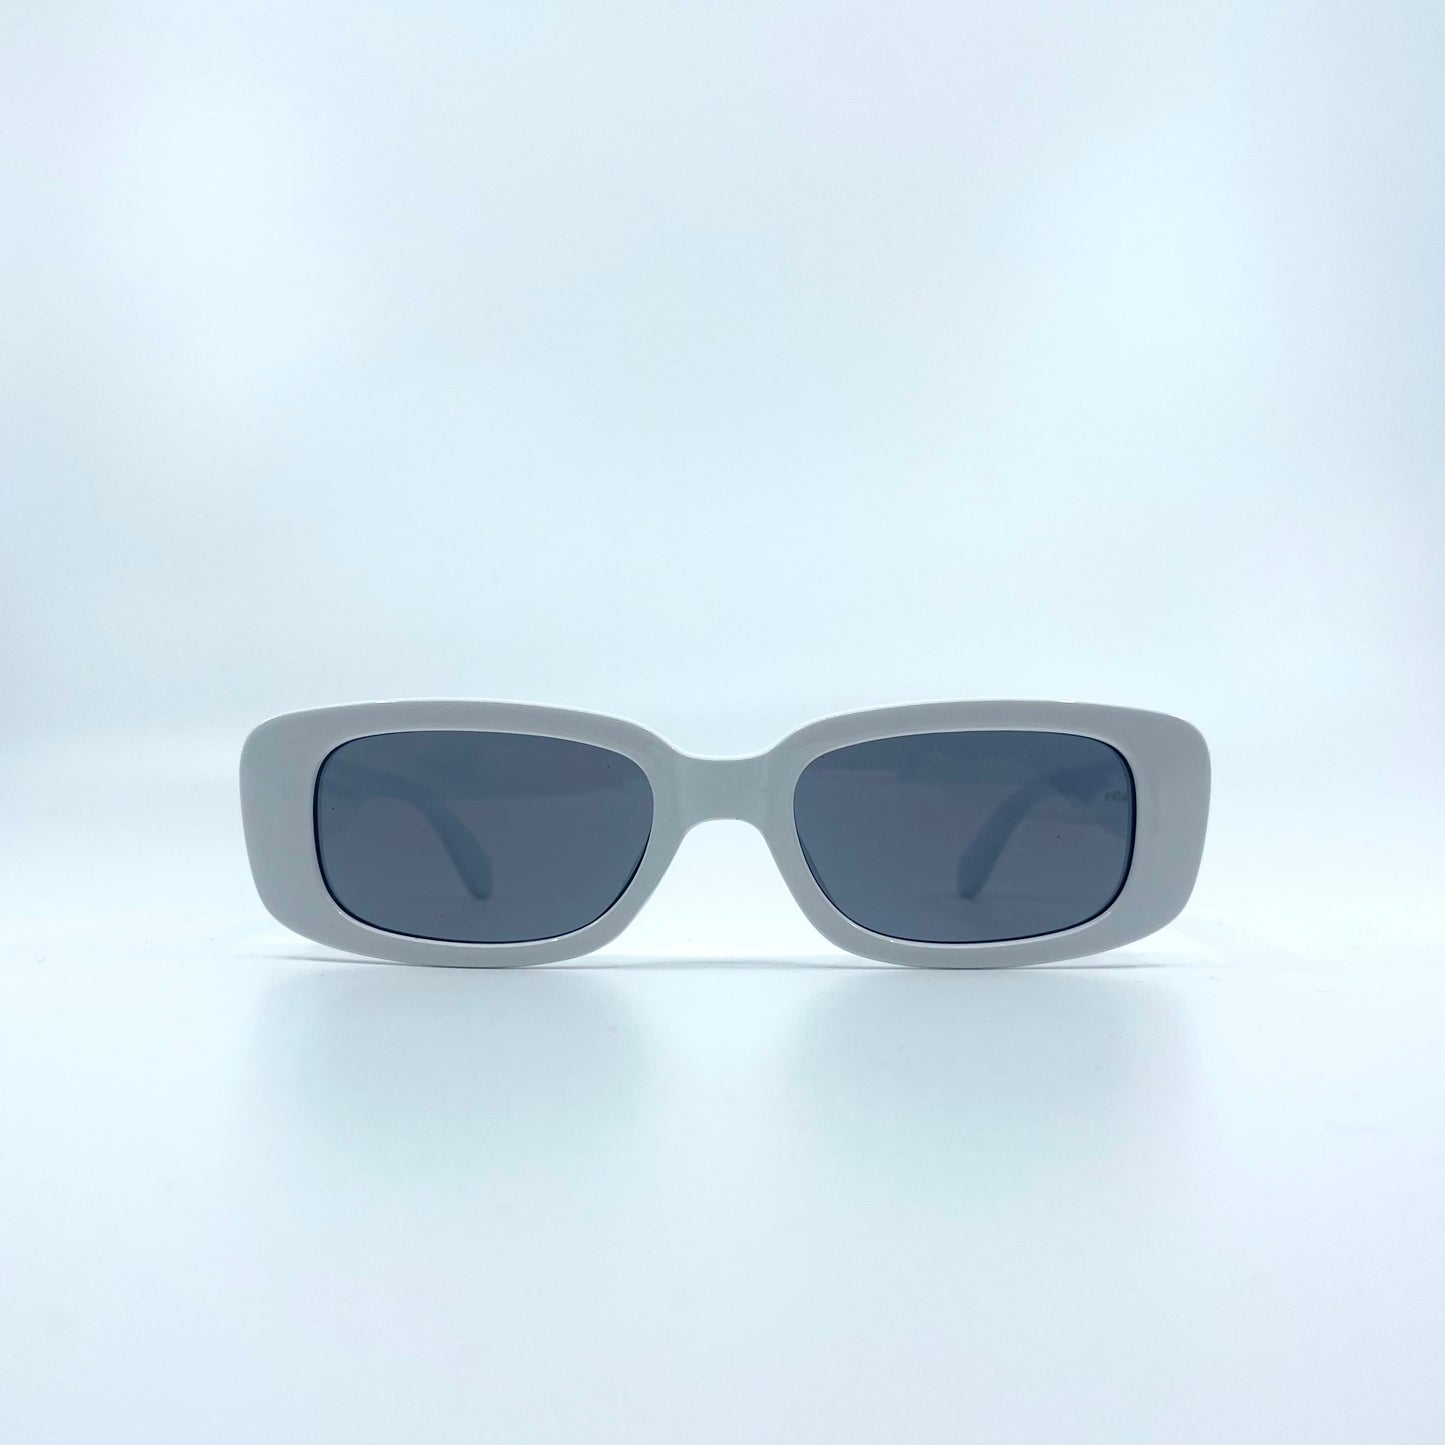 “Los Feliz” Sunglasses